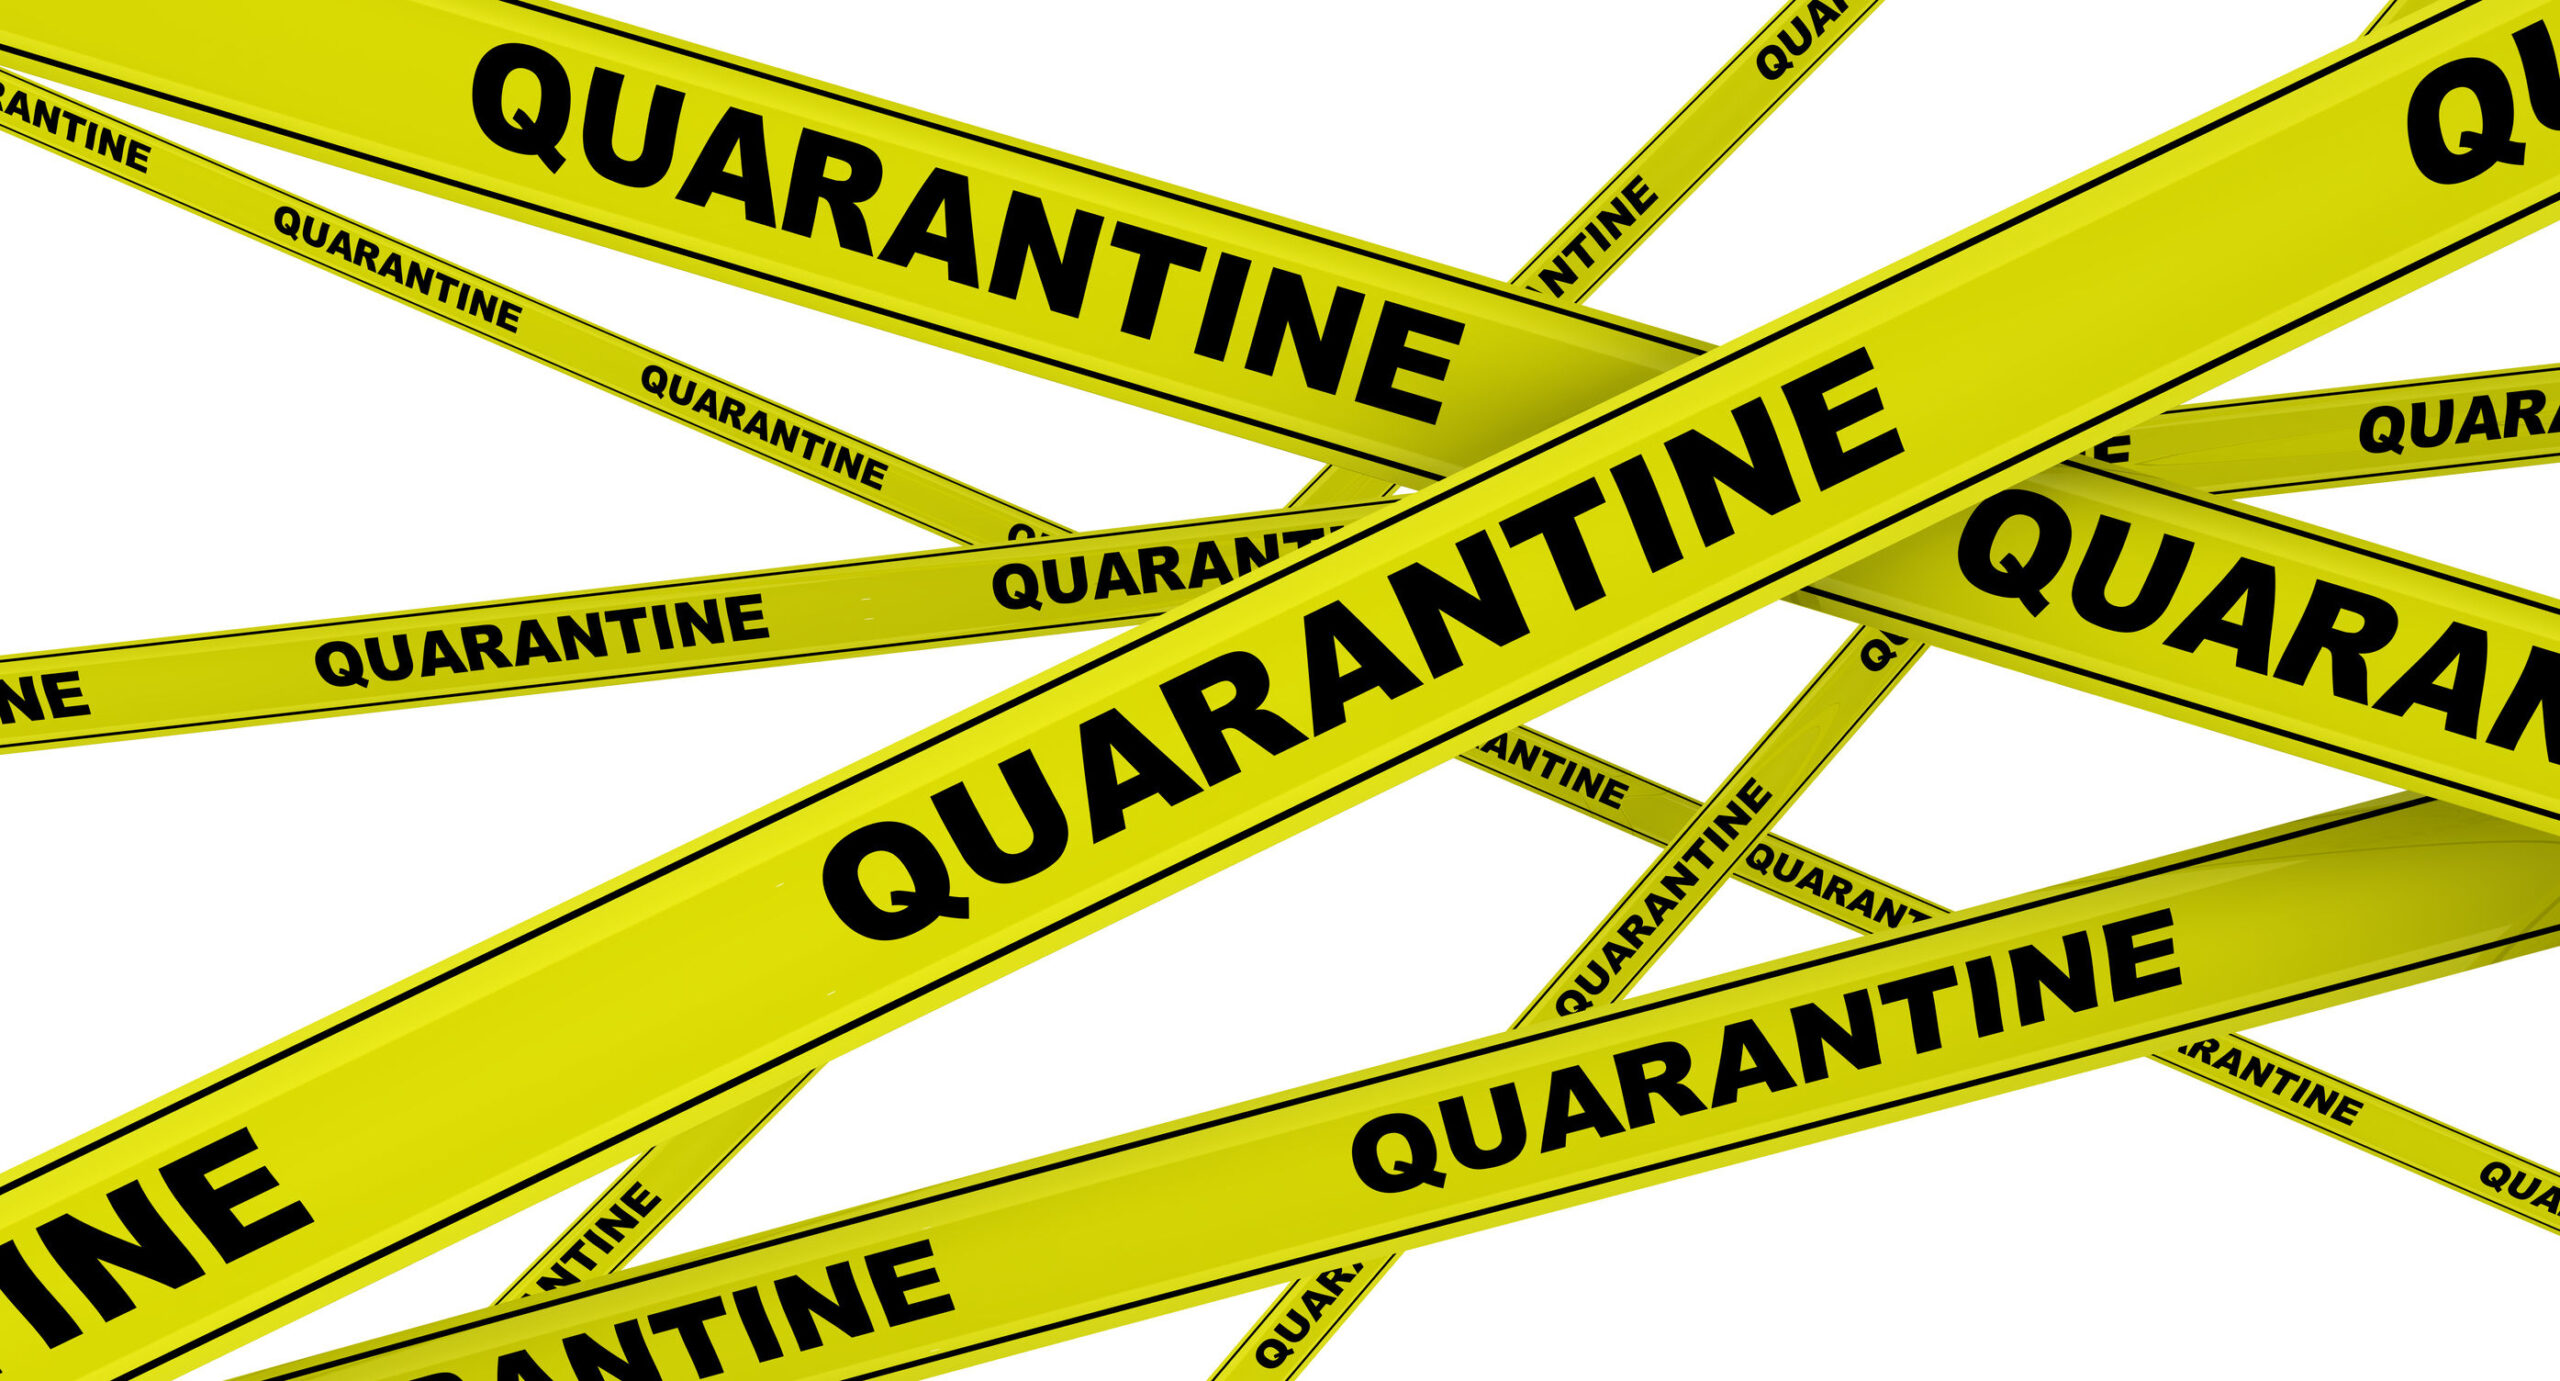 JoCo in, Wyandotte out of shortened CDC quarantine